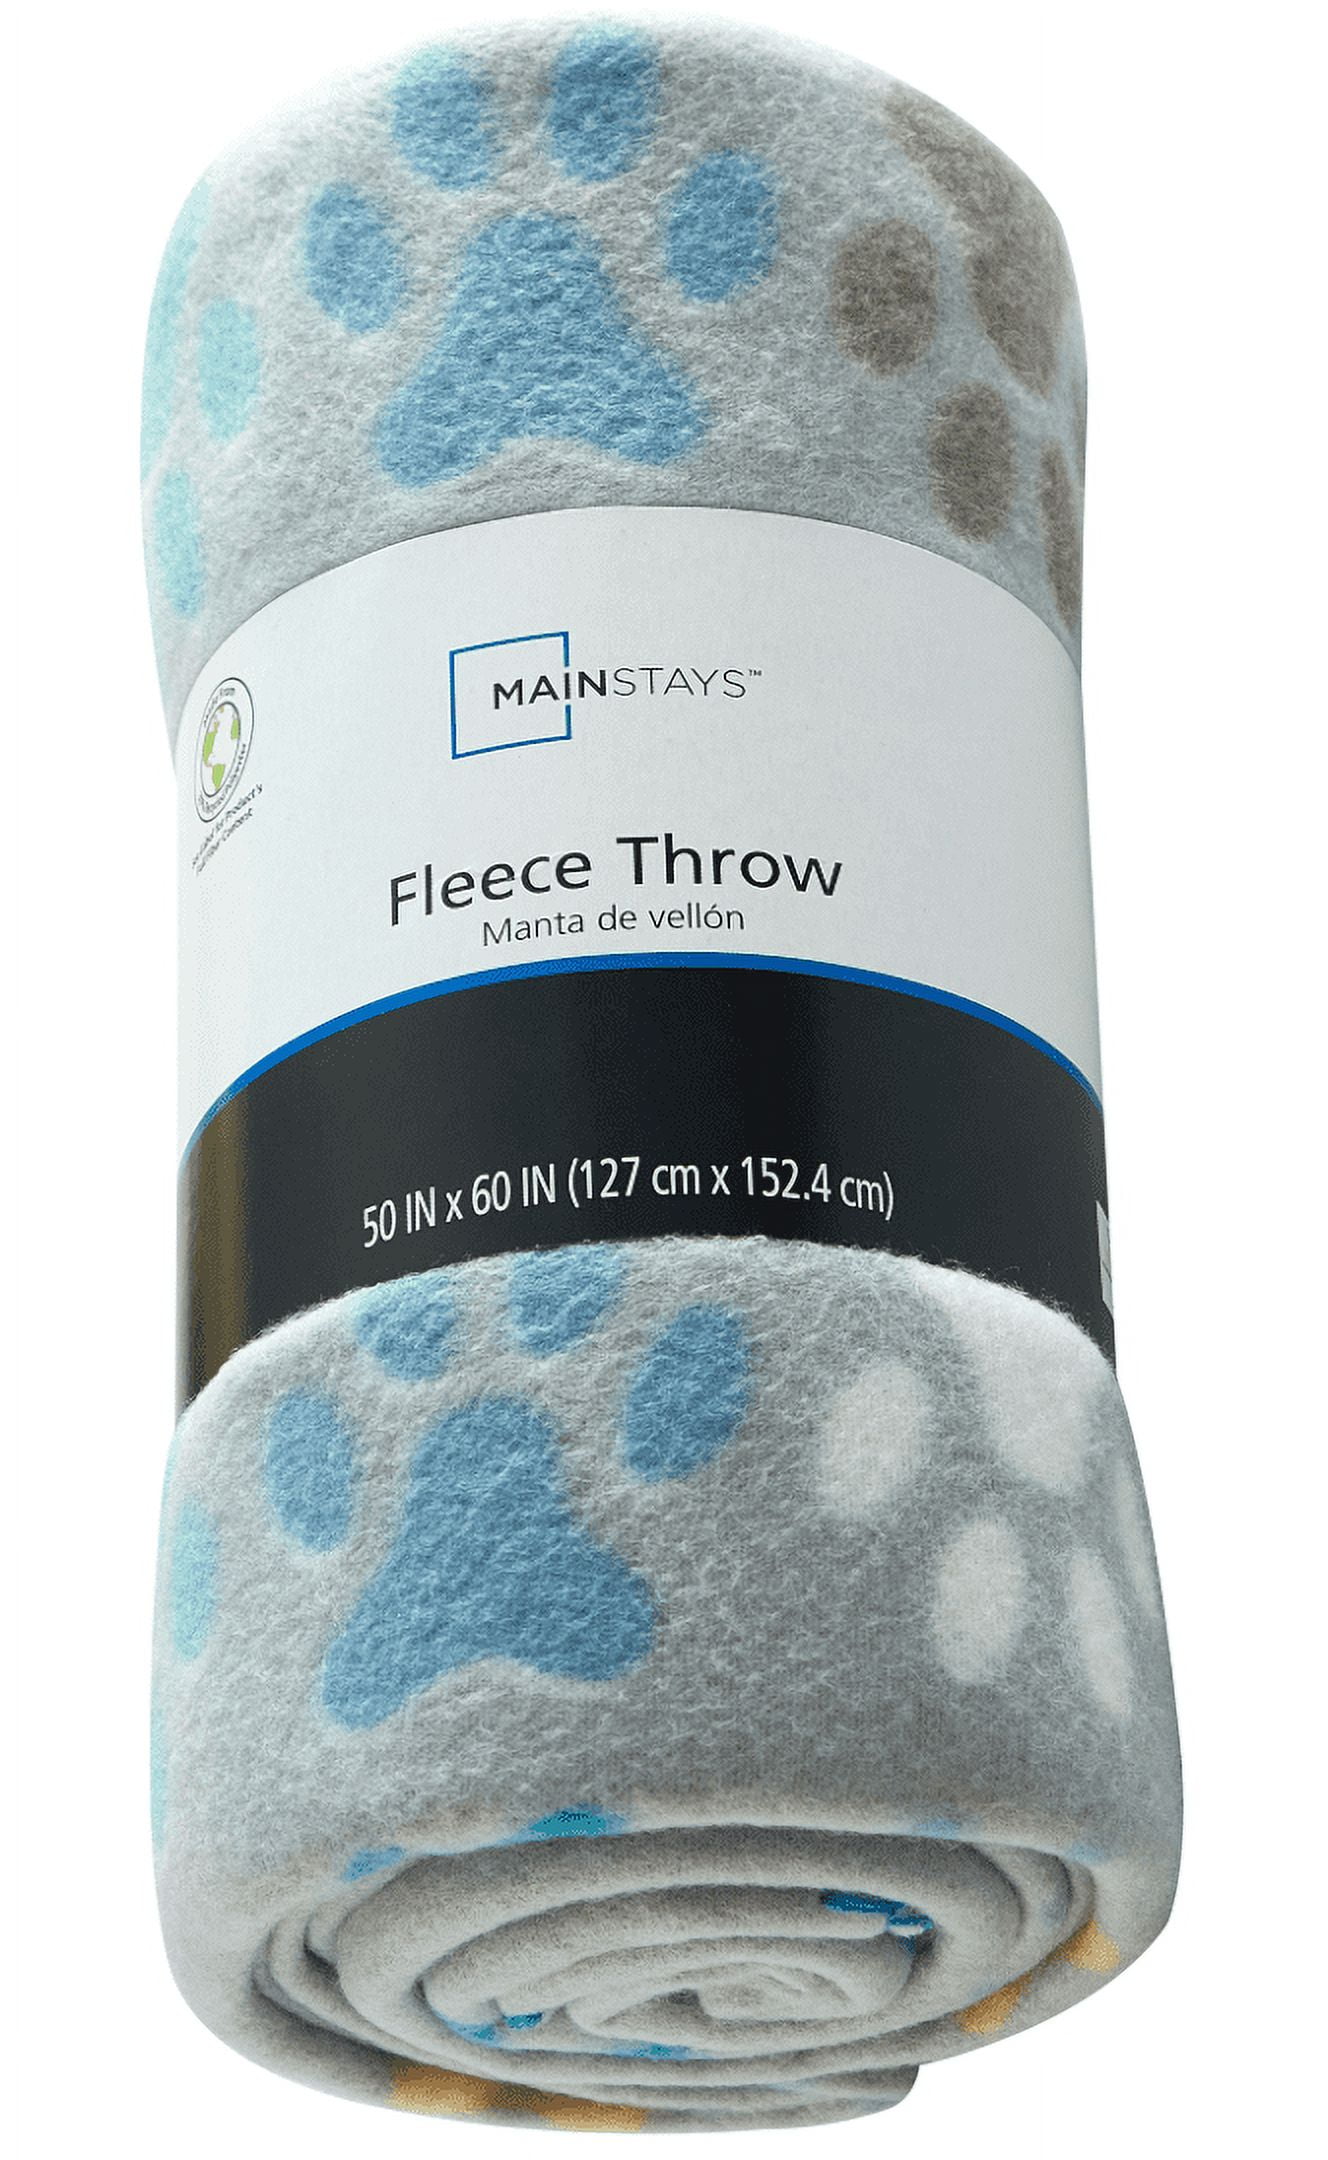 Mainstays Fleece Throw Blanket ONLY $3 at Walmart!